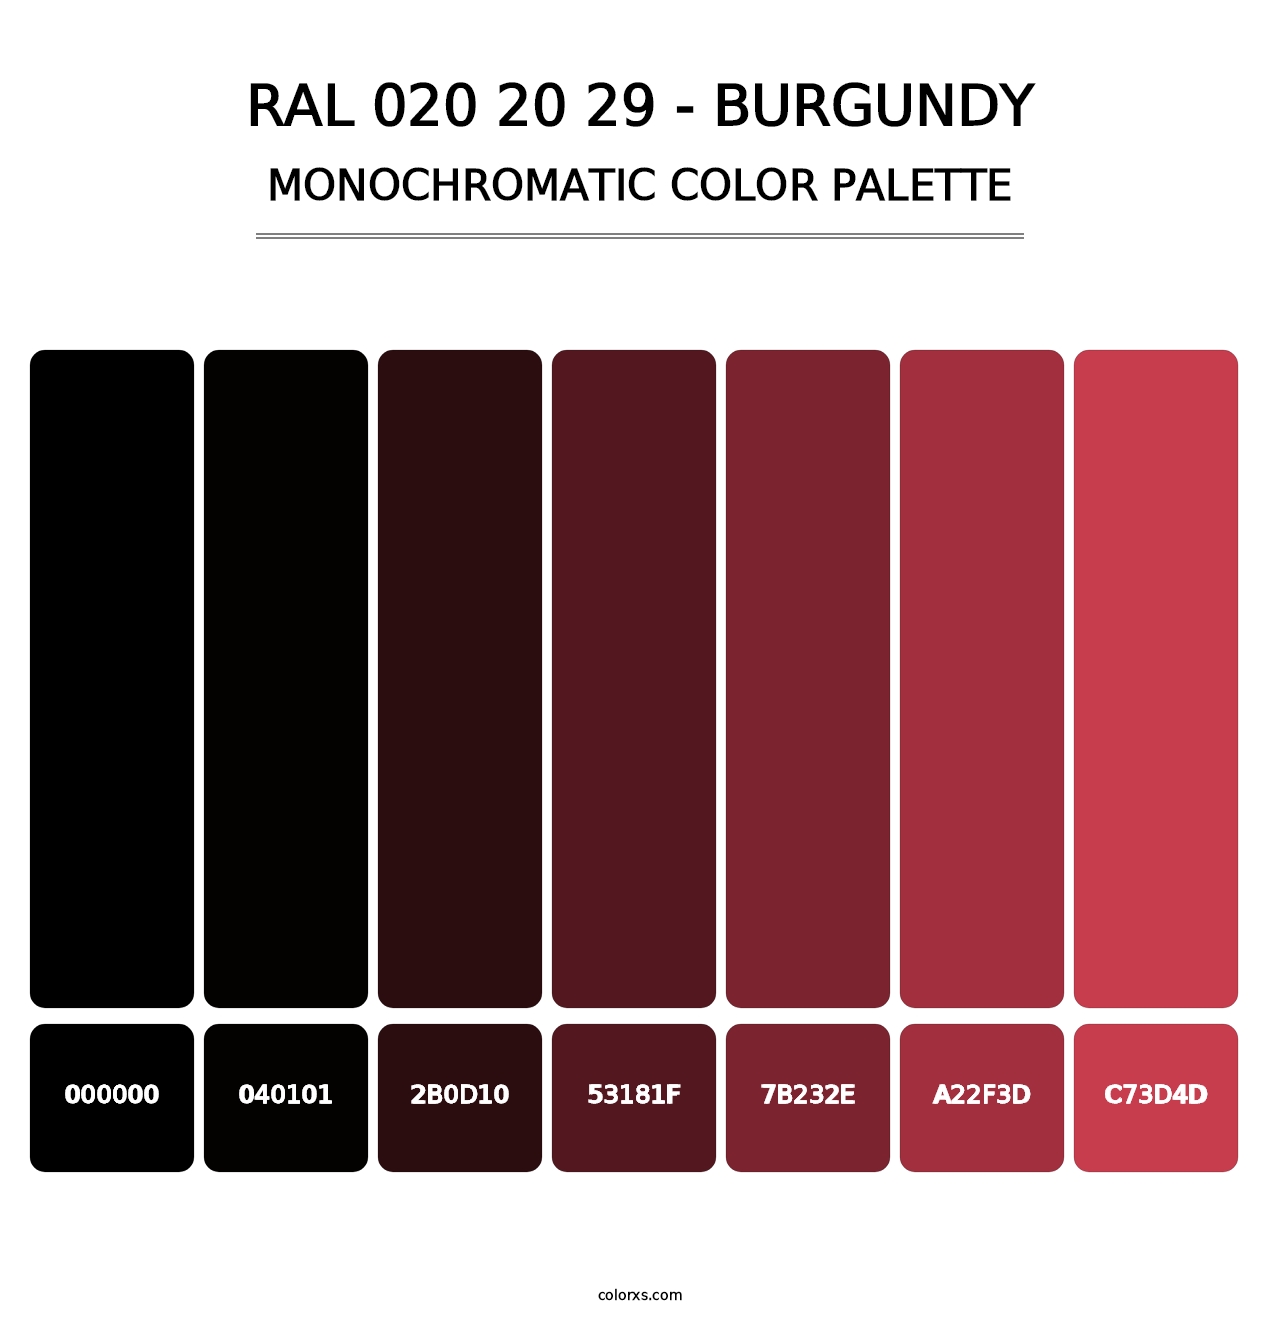 RAL 020 20 29 - Burgundy - Monochromatic Color Palette